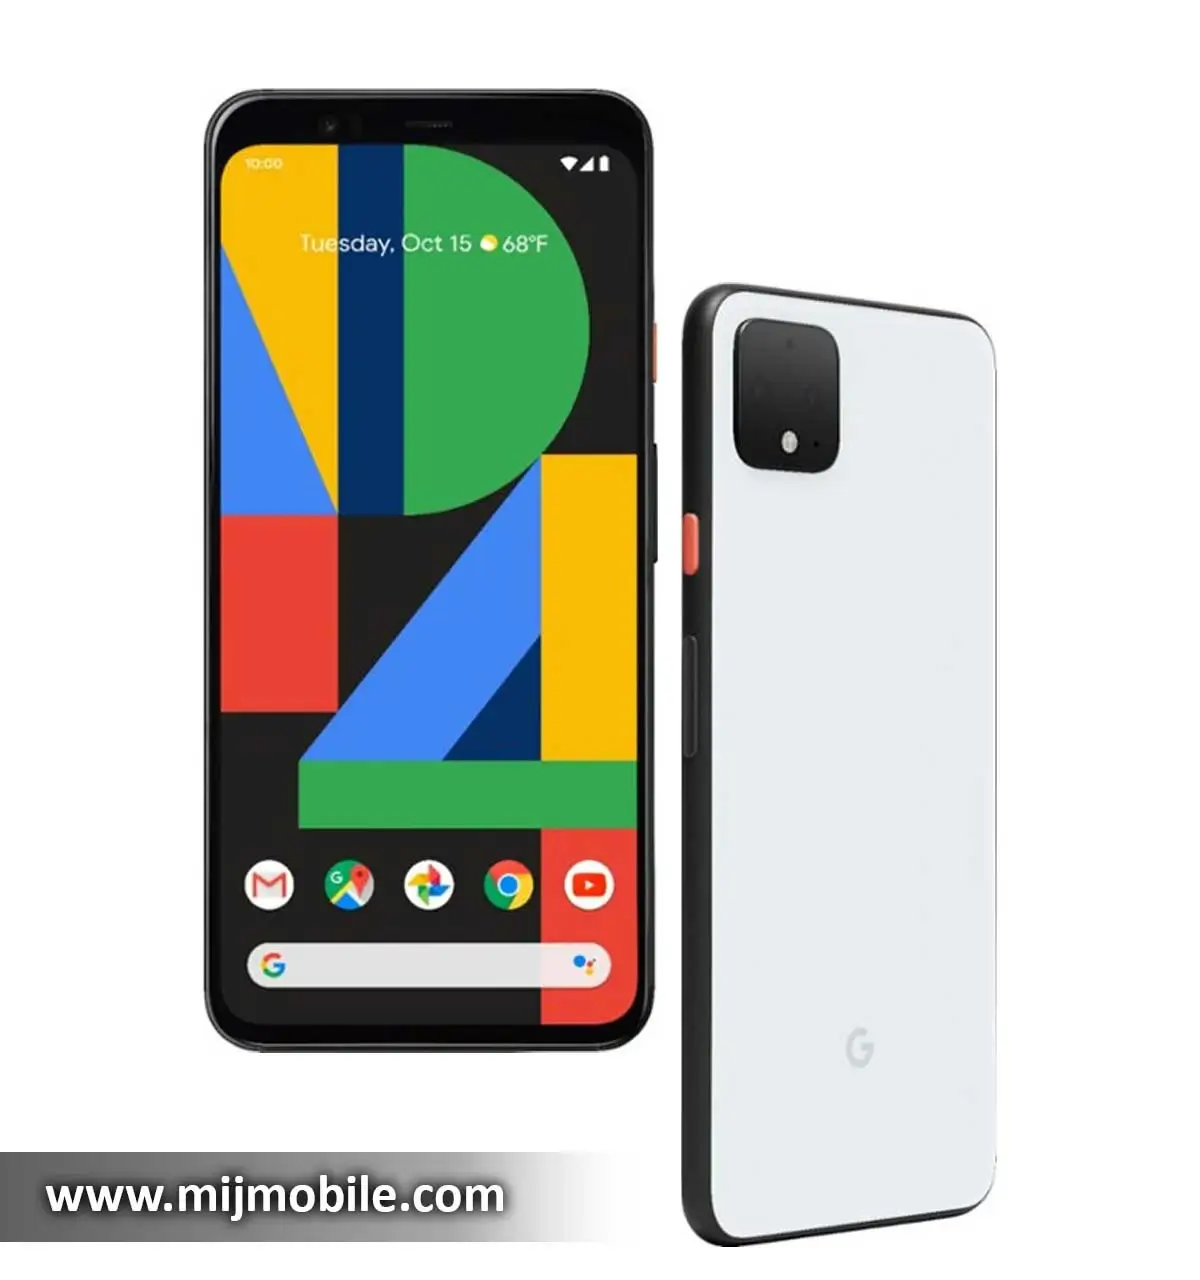 Google Pixel 4 XL Price in Pakistan